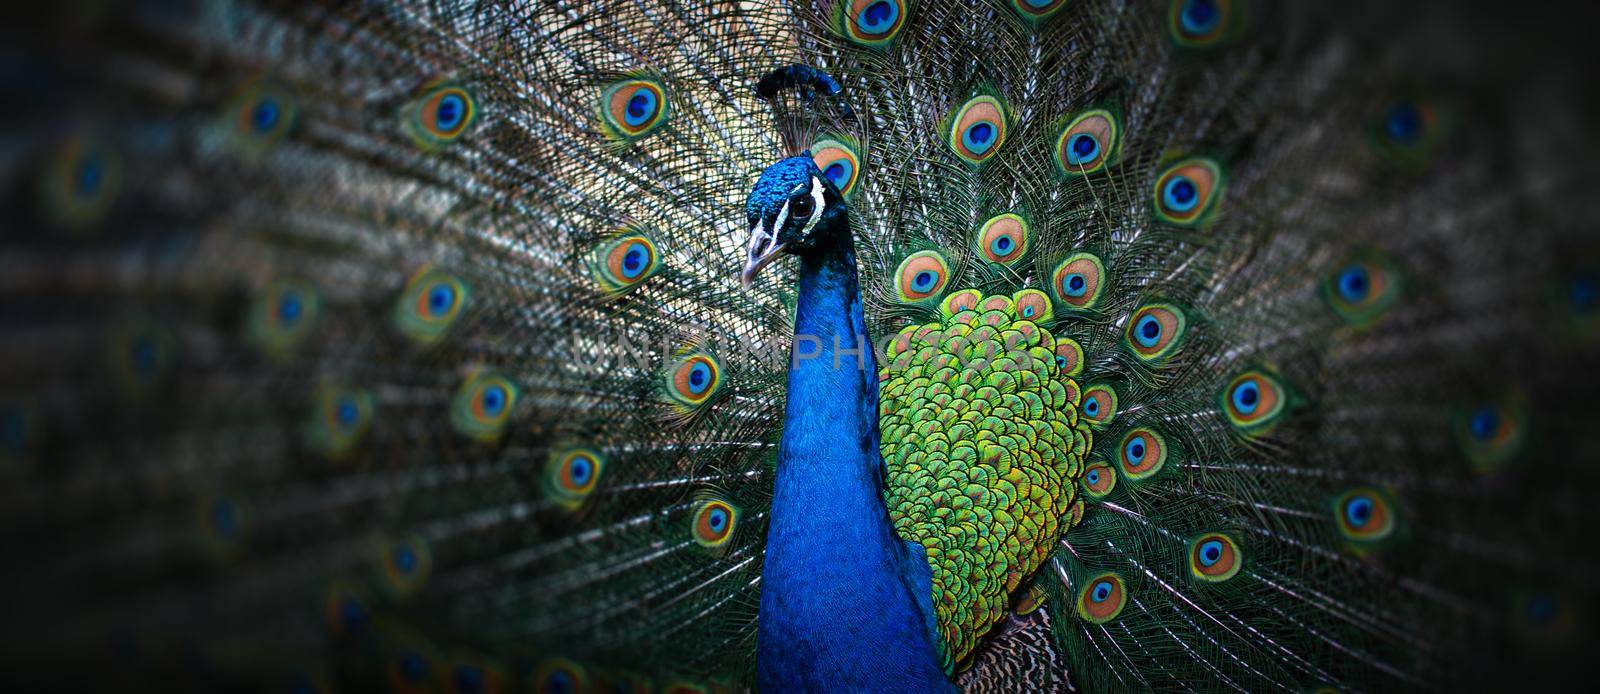 beautiful peacock by palinchak